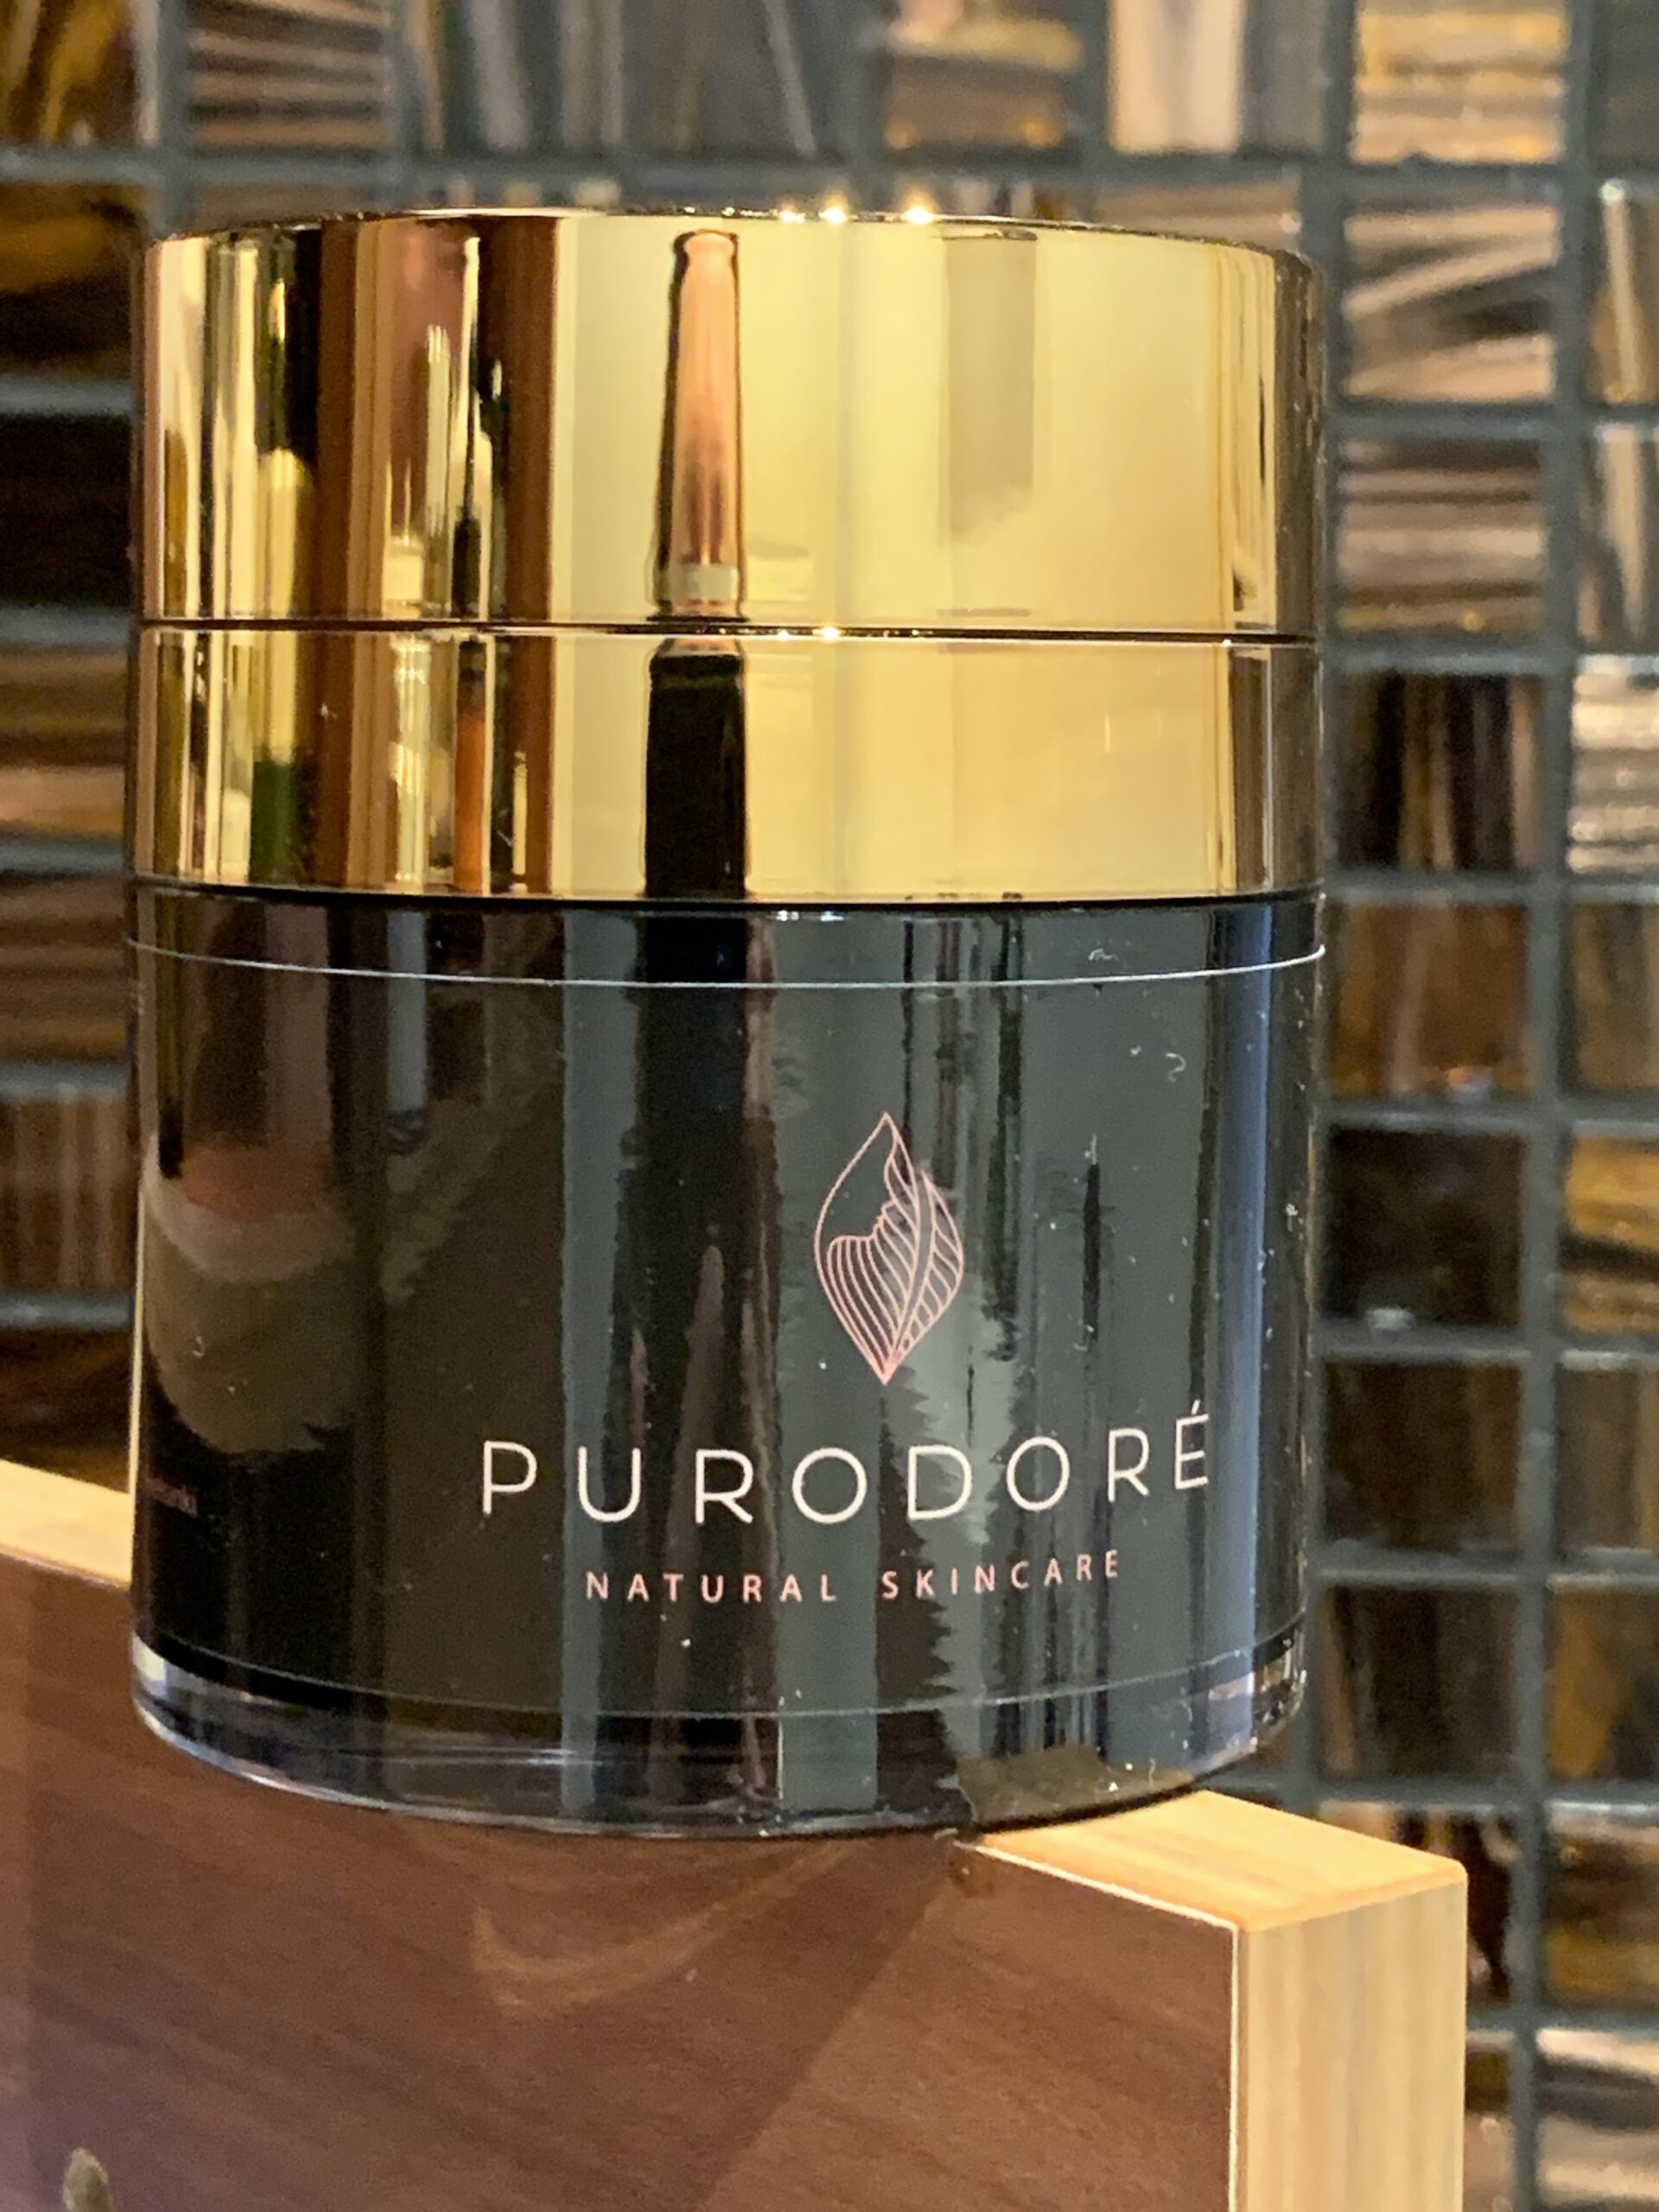 Purodoré revitalizing day and night gold cream